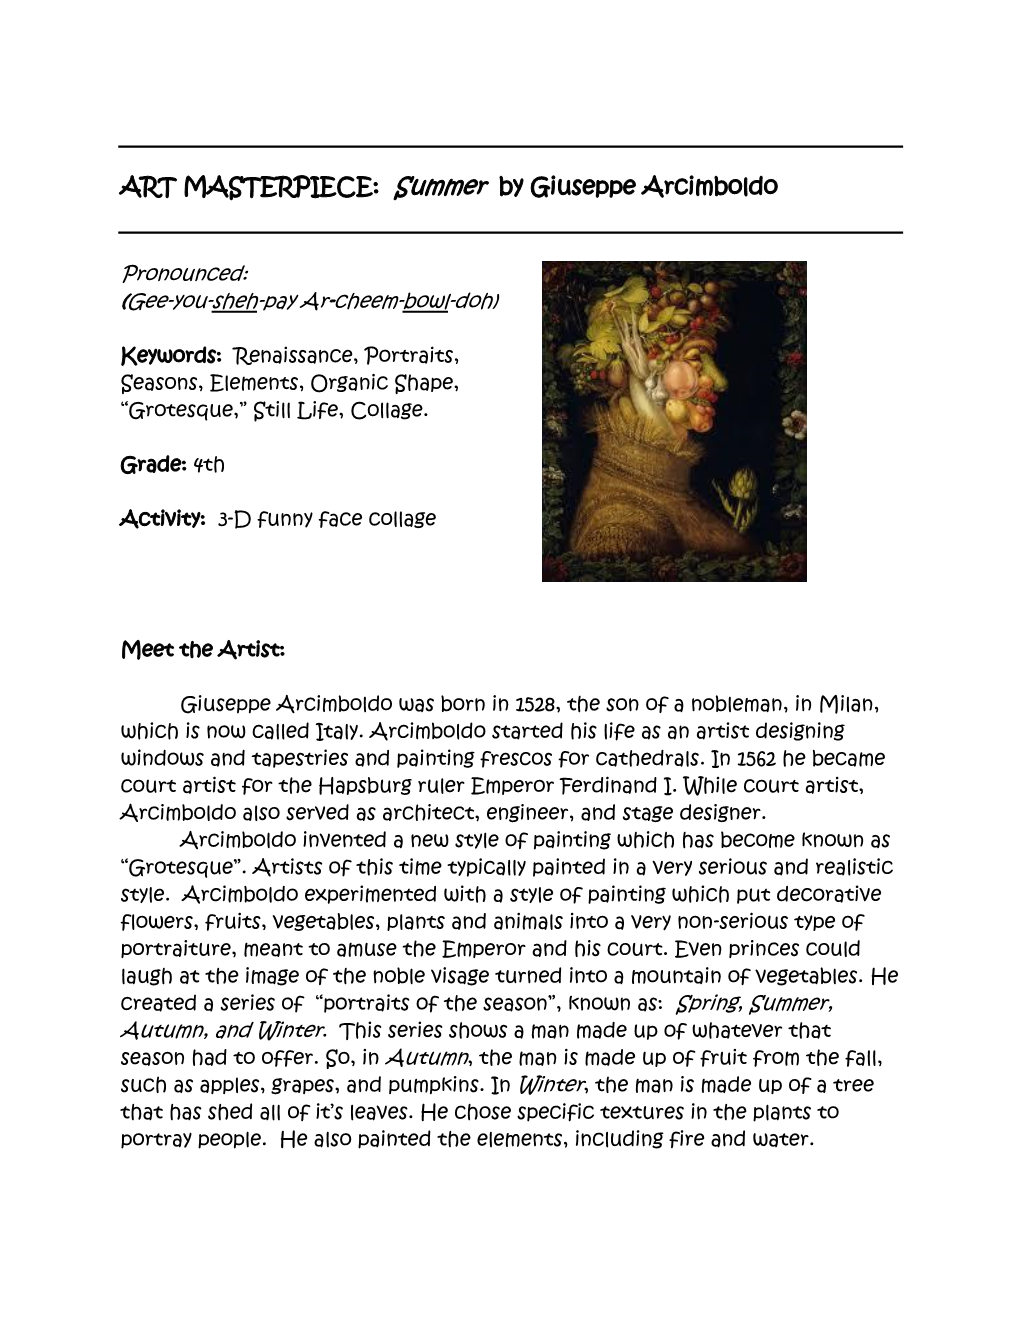 ART MASTERPIECE: Vertumnus (Spring), by Giuseppe Arcimboldo